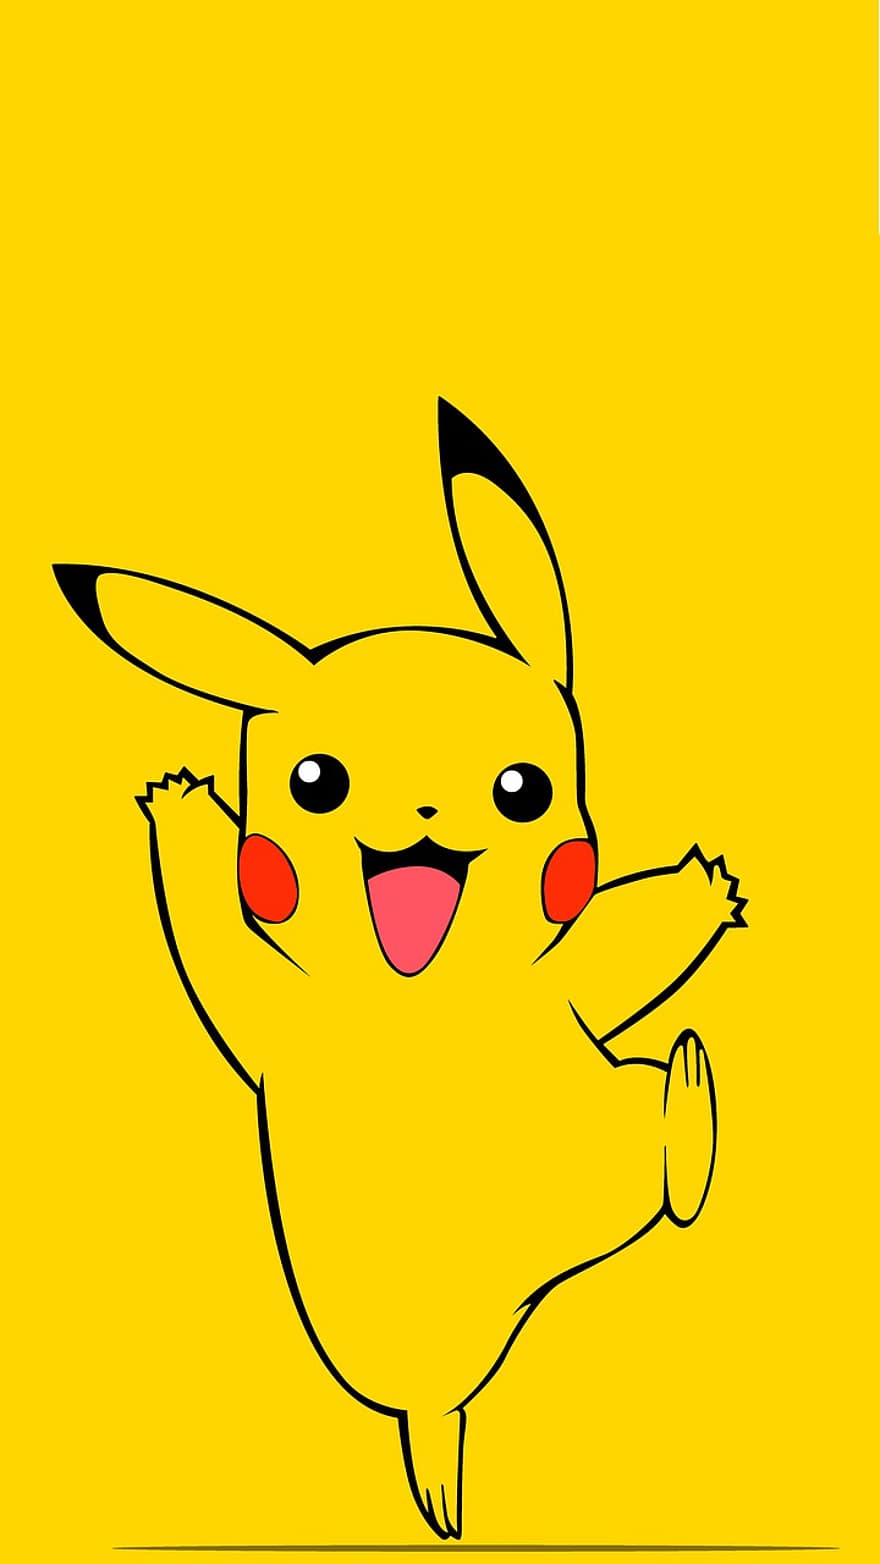 Pikachu, pokemon, personaje, dibujos animados, linda, papel pintado, jugador, Teléfono móvil, los niños